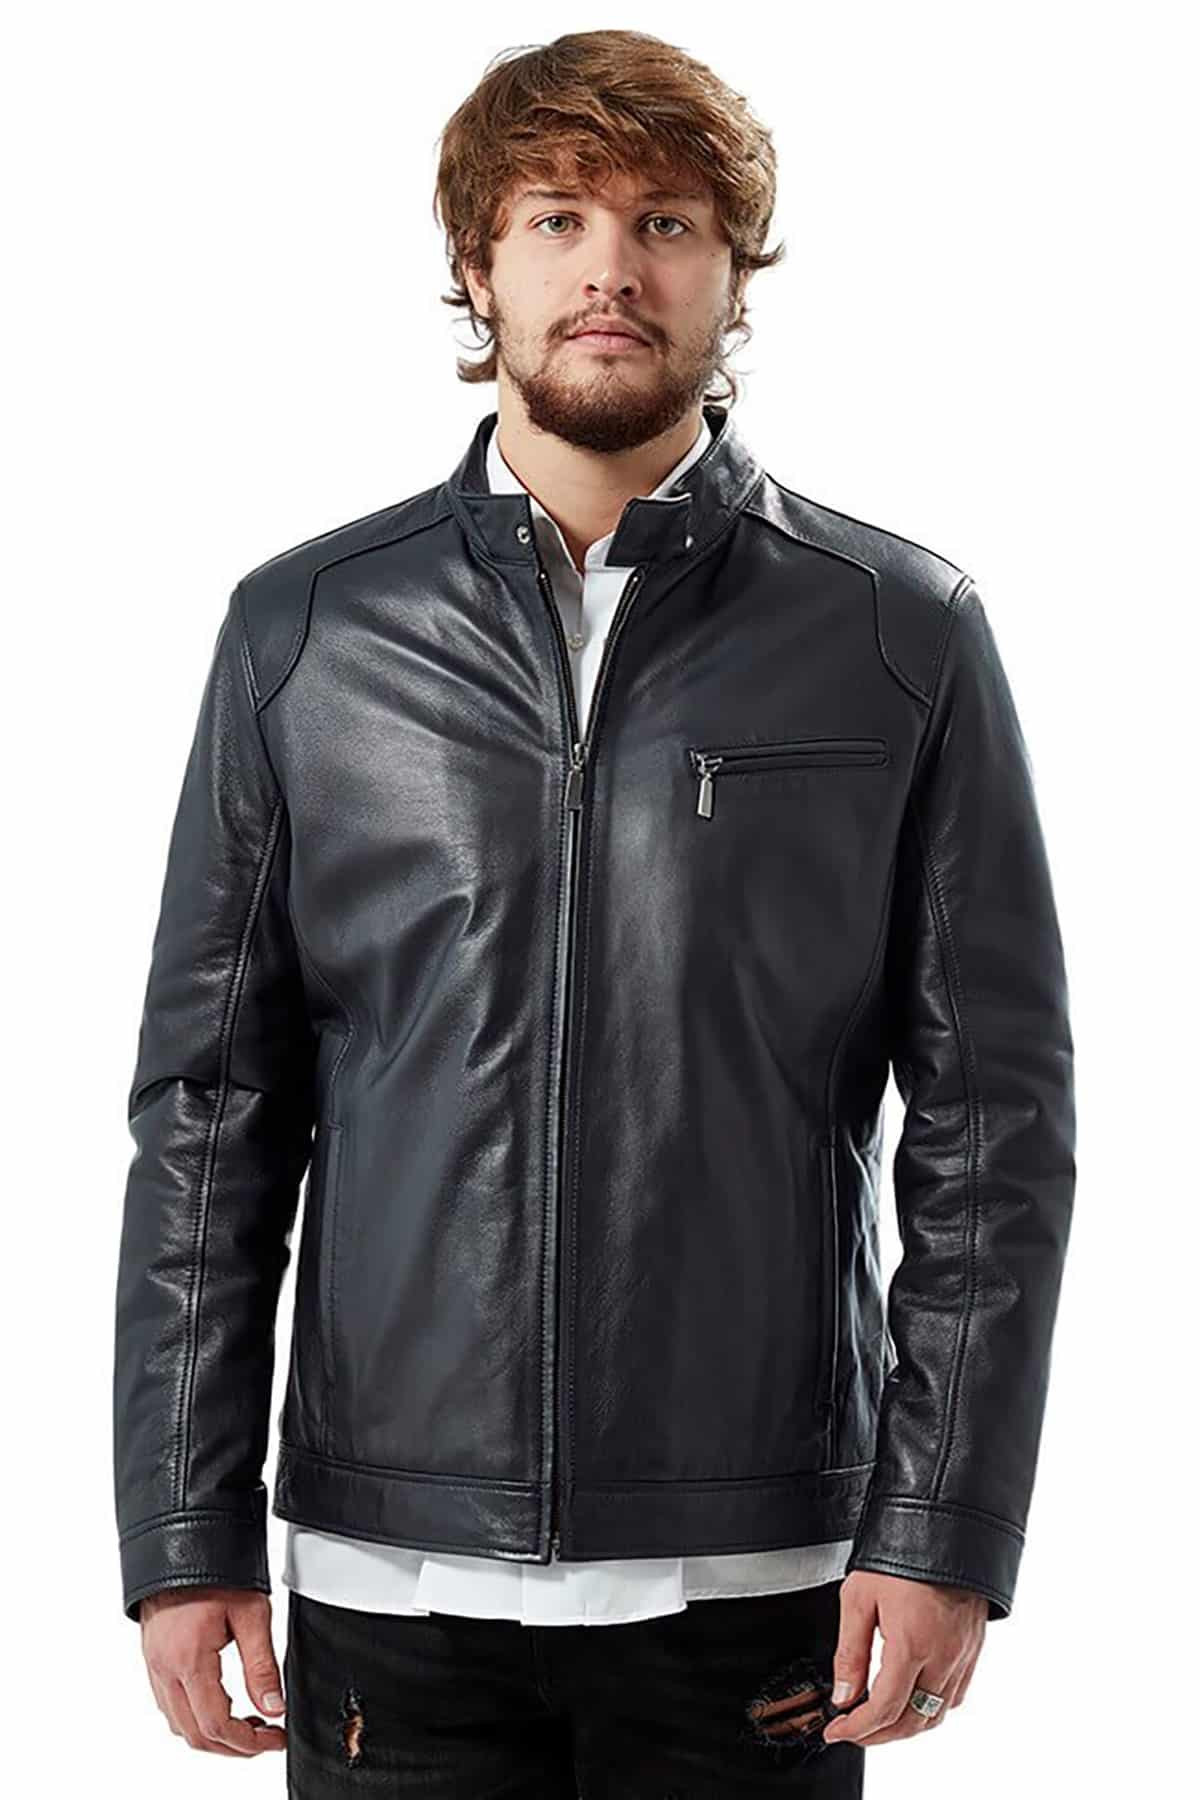 Men’s Leather Jacket in Navy Blue4